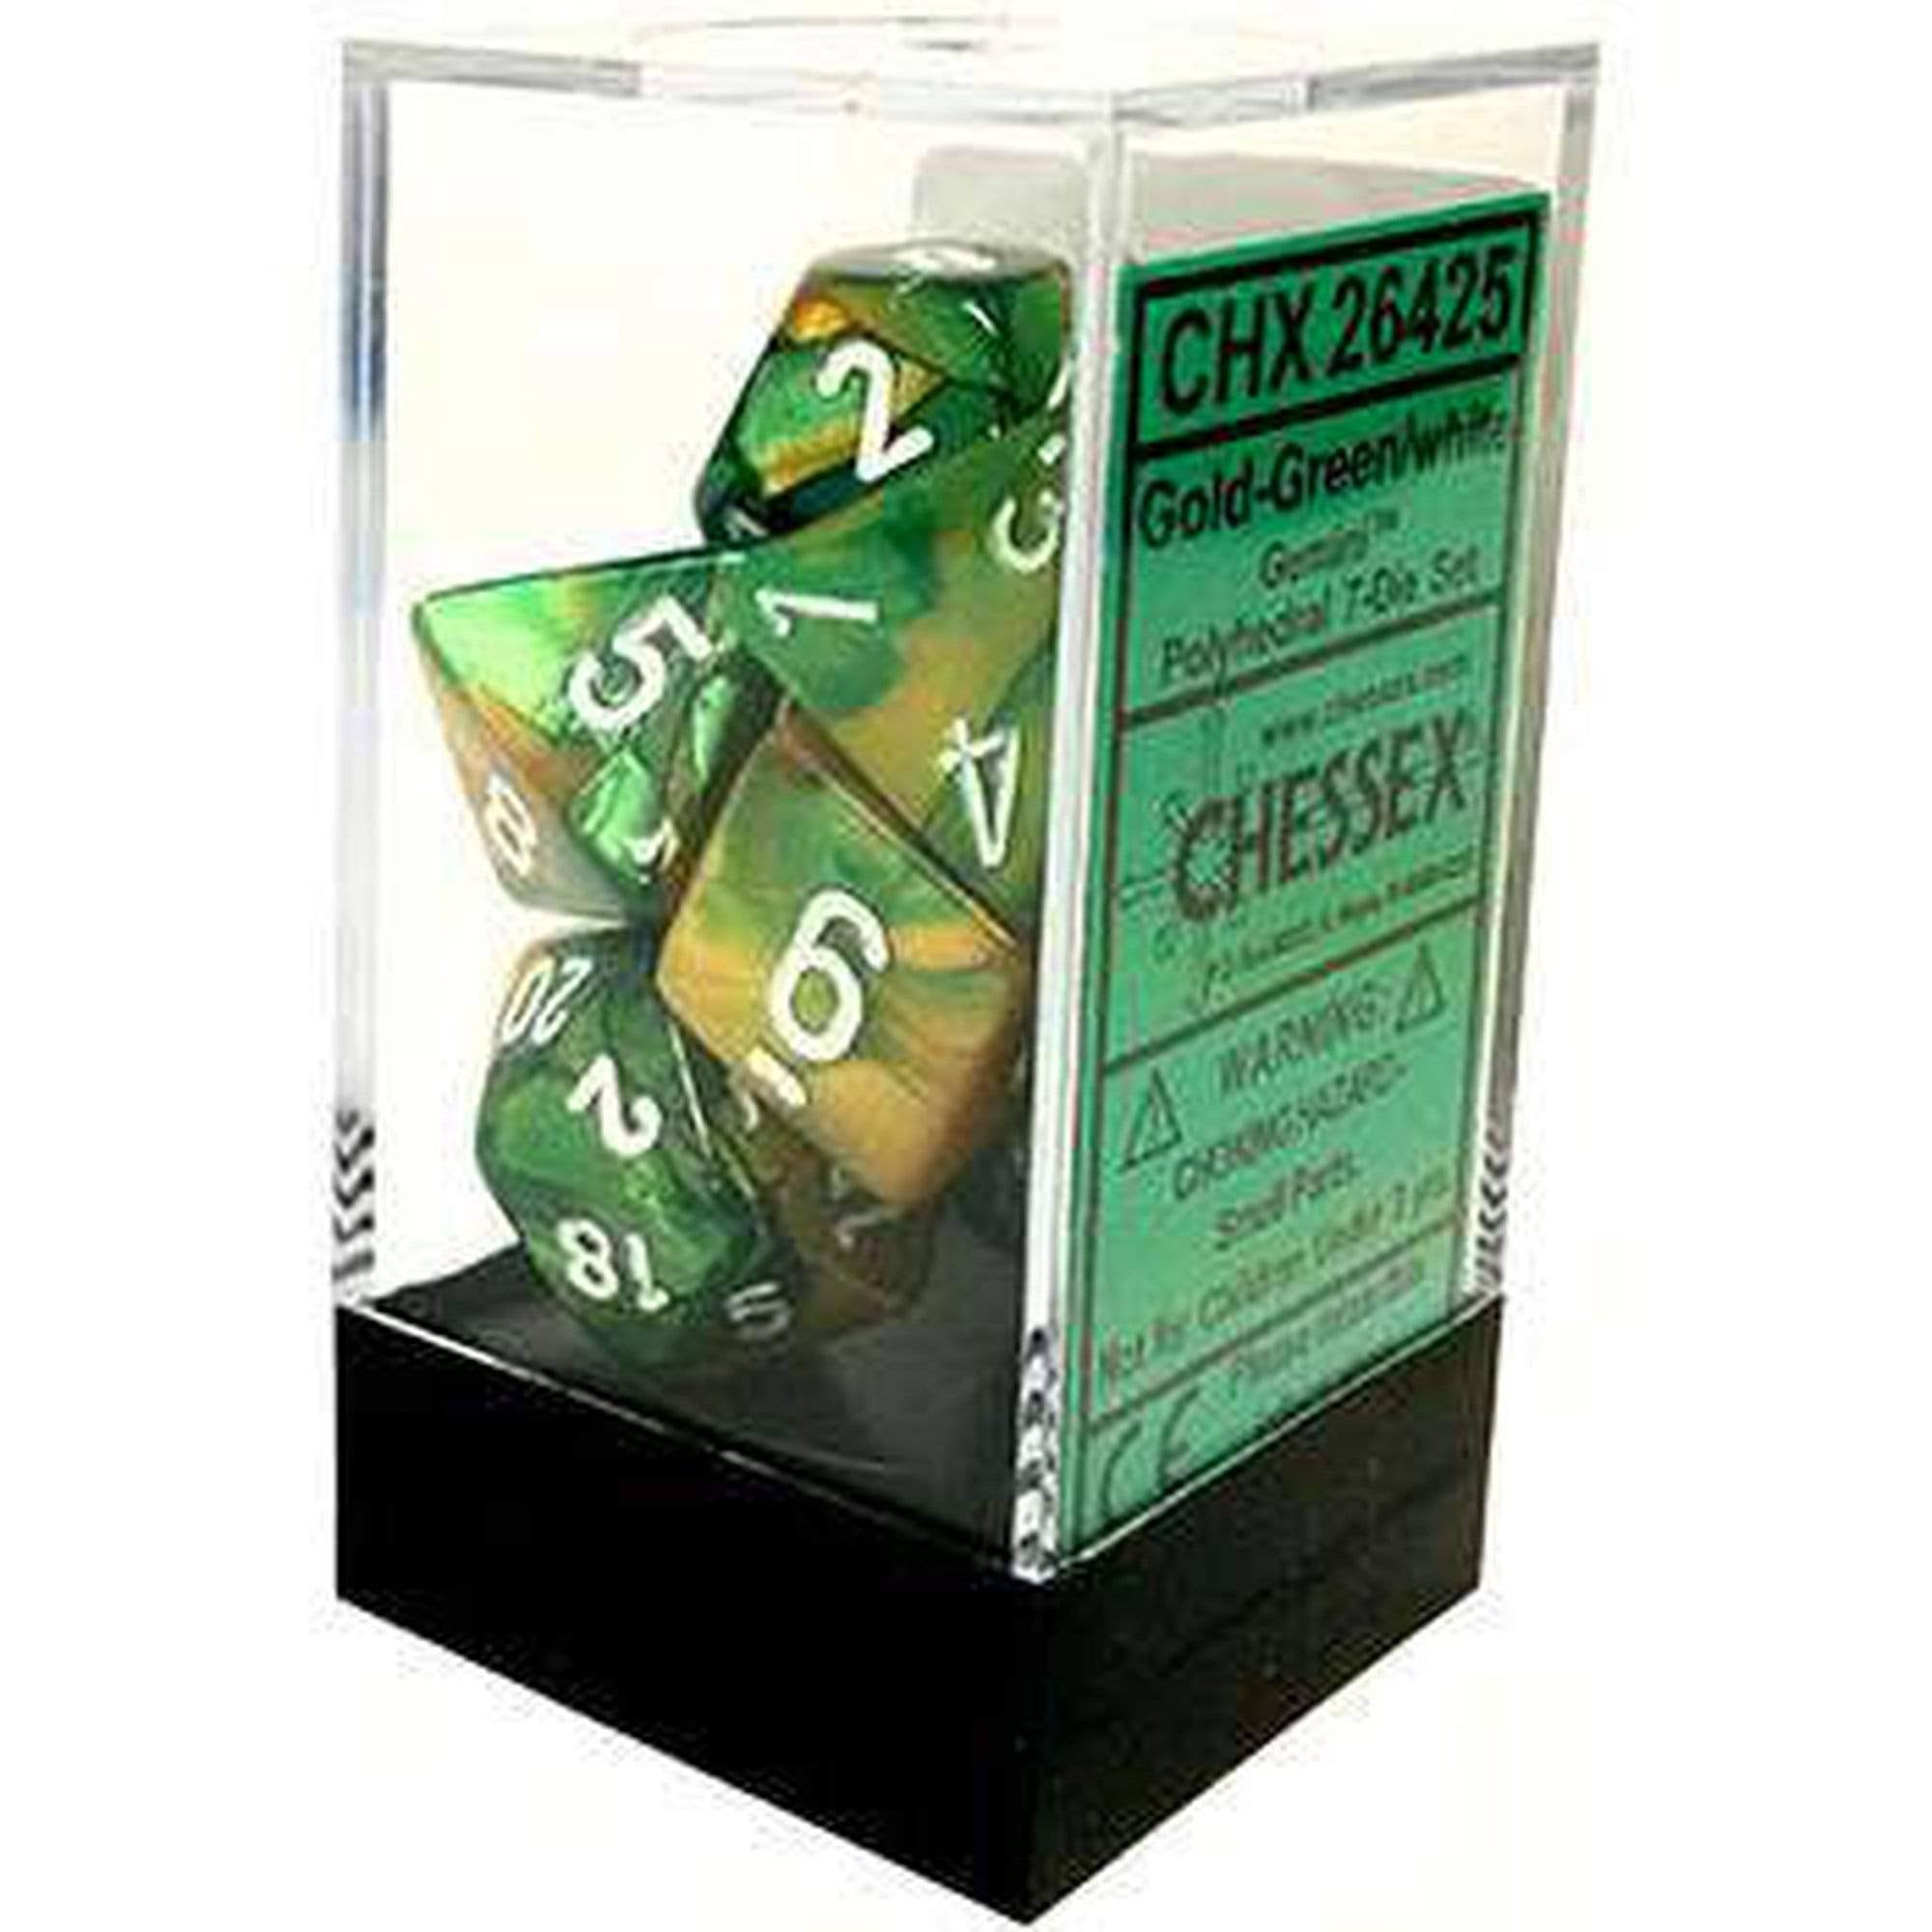 Chessex Gemini Gold Green White 7 Die Set